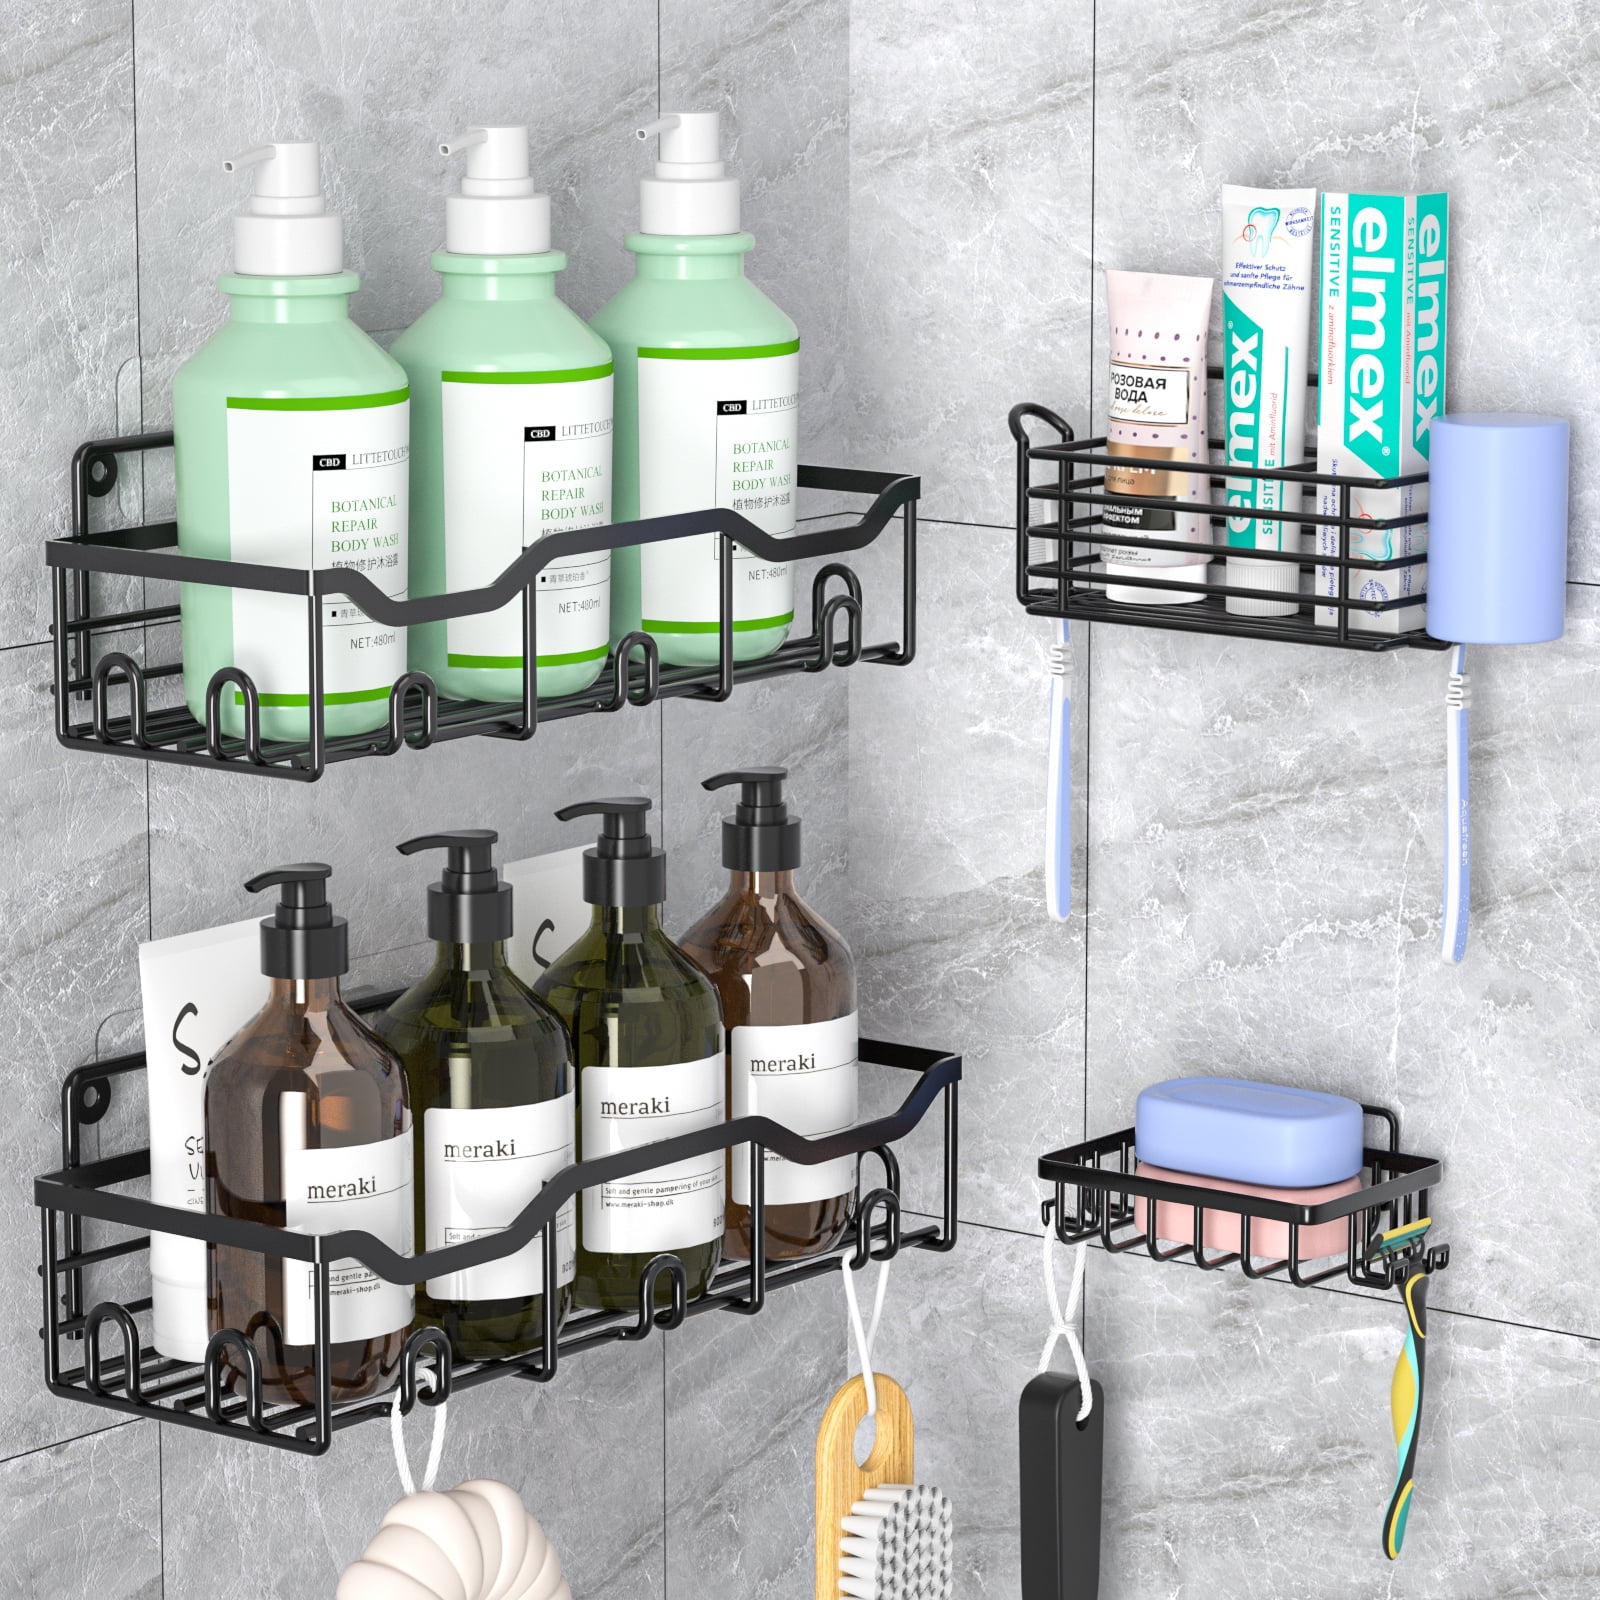 Bathroom Shelf Shower Basket Bathroom Bathroom Self Adhesive Shower Shelf 2